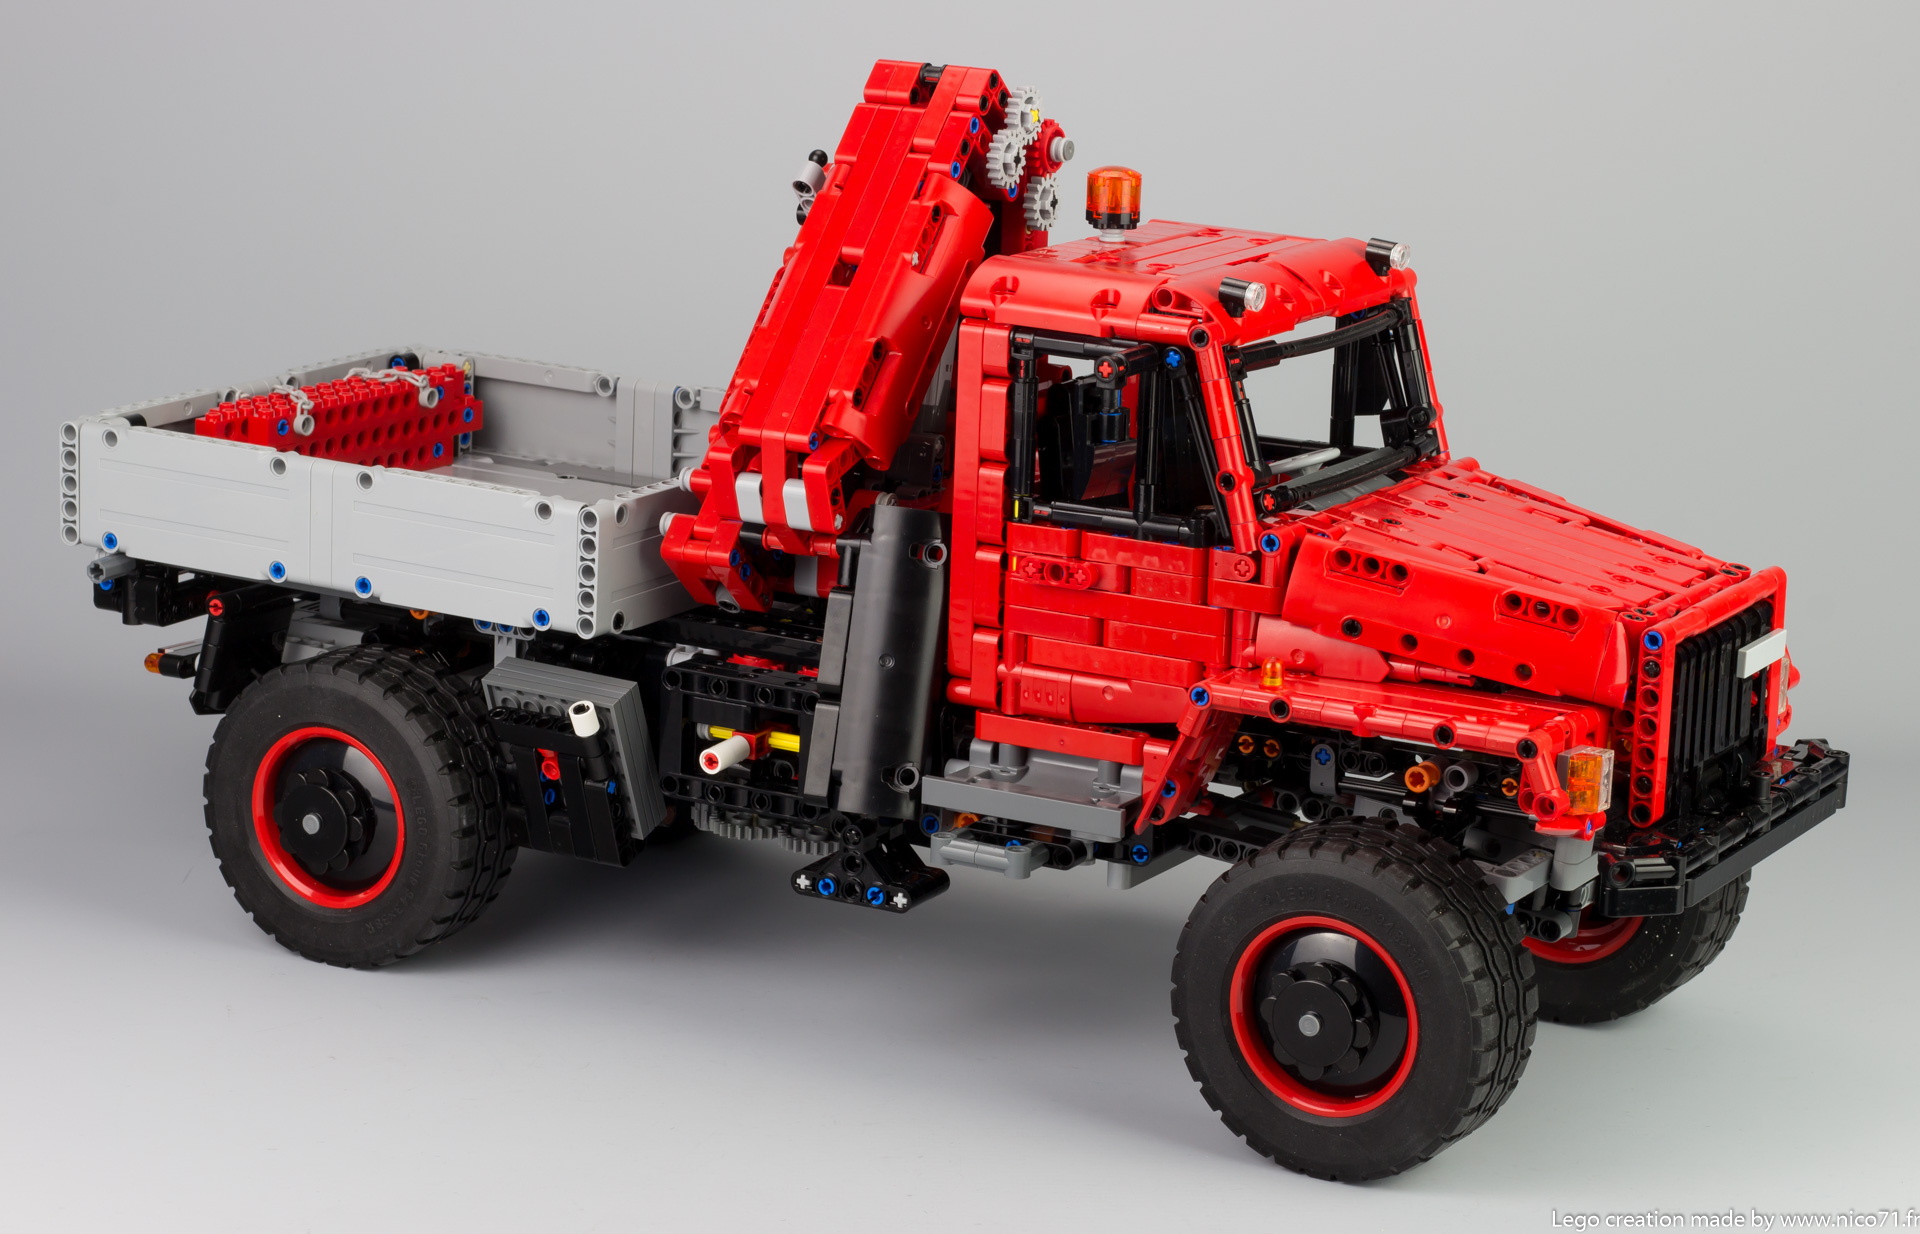 Plys dukke Antologi Neuropati 42082 E Model – Offroad Truck With Manipulator Crane – Nico71's Technic  Creations